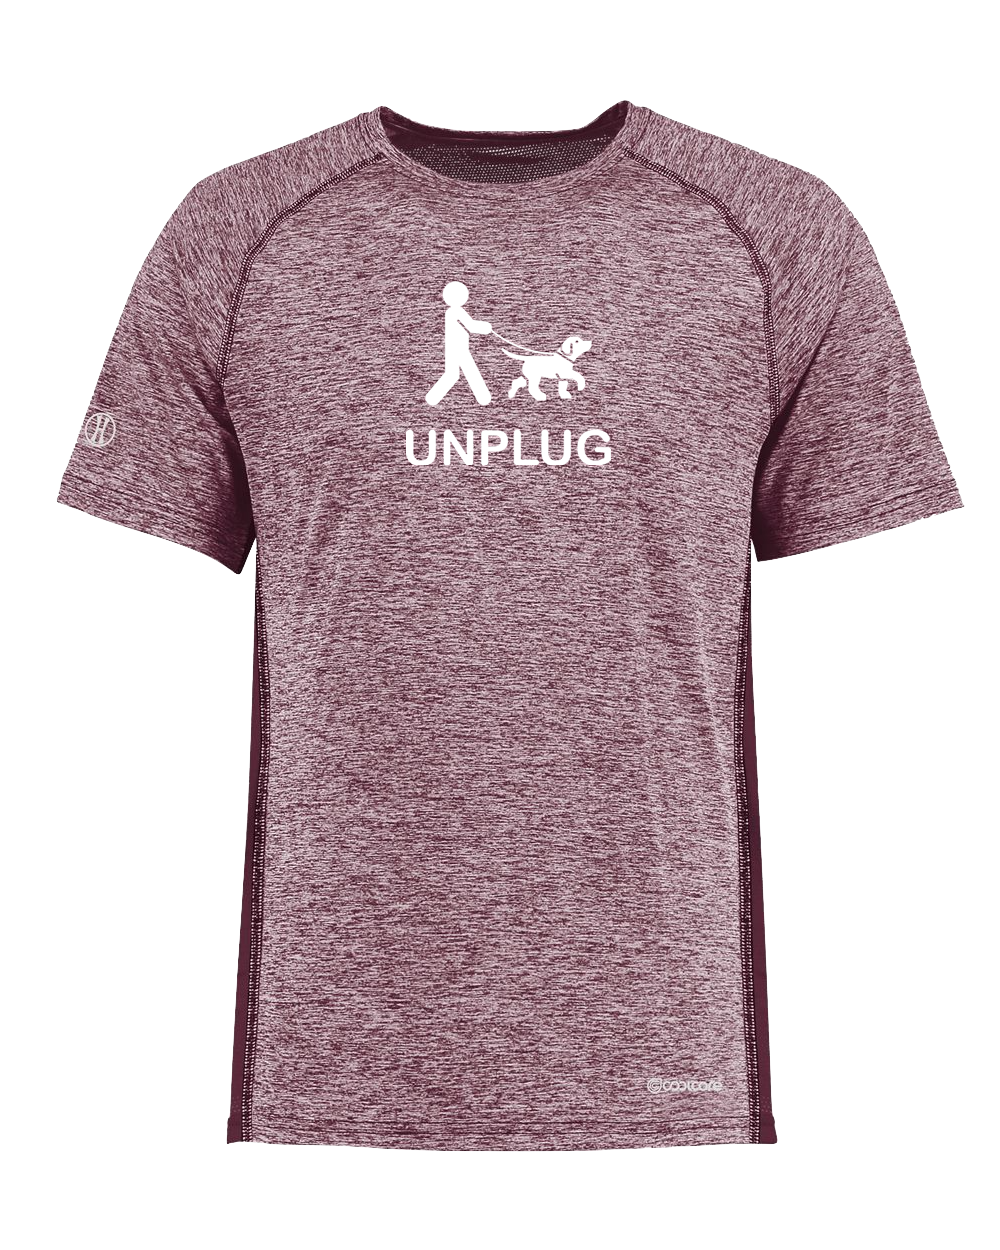 DOG WALKING Poly/Elastane High Performance T-Shirt with UPF 50+